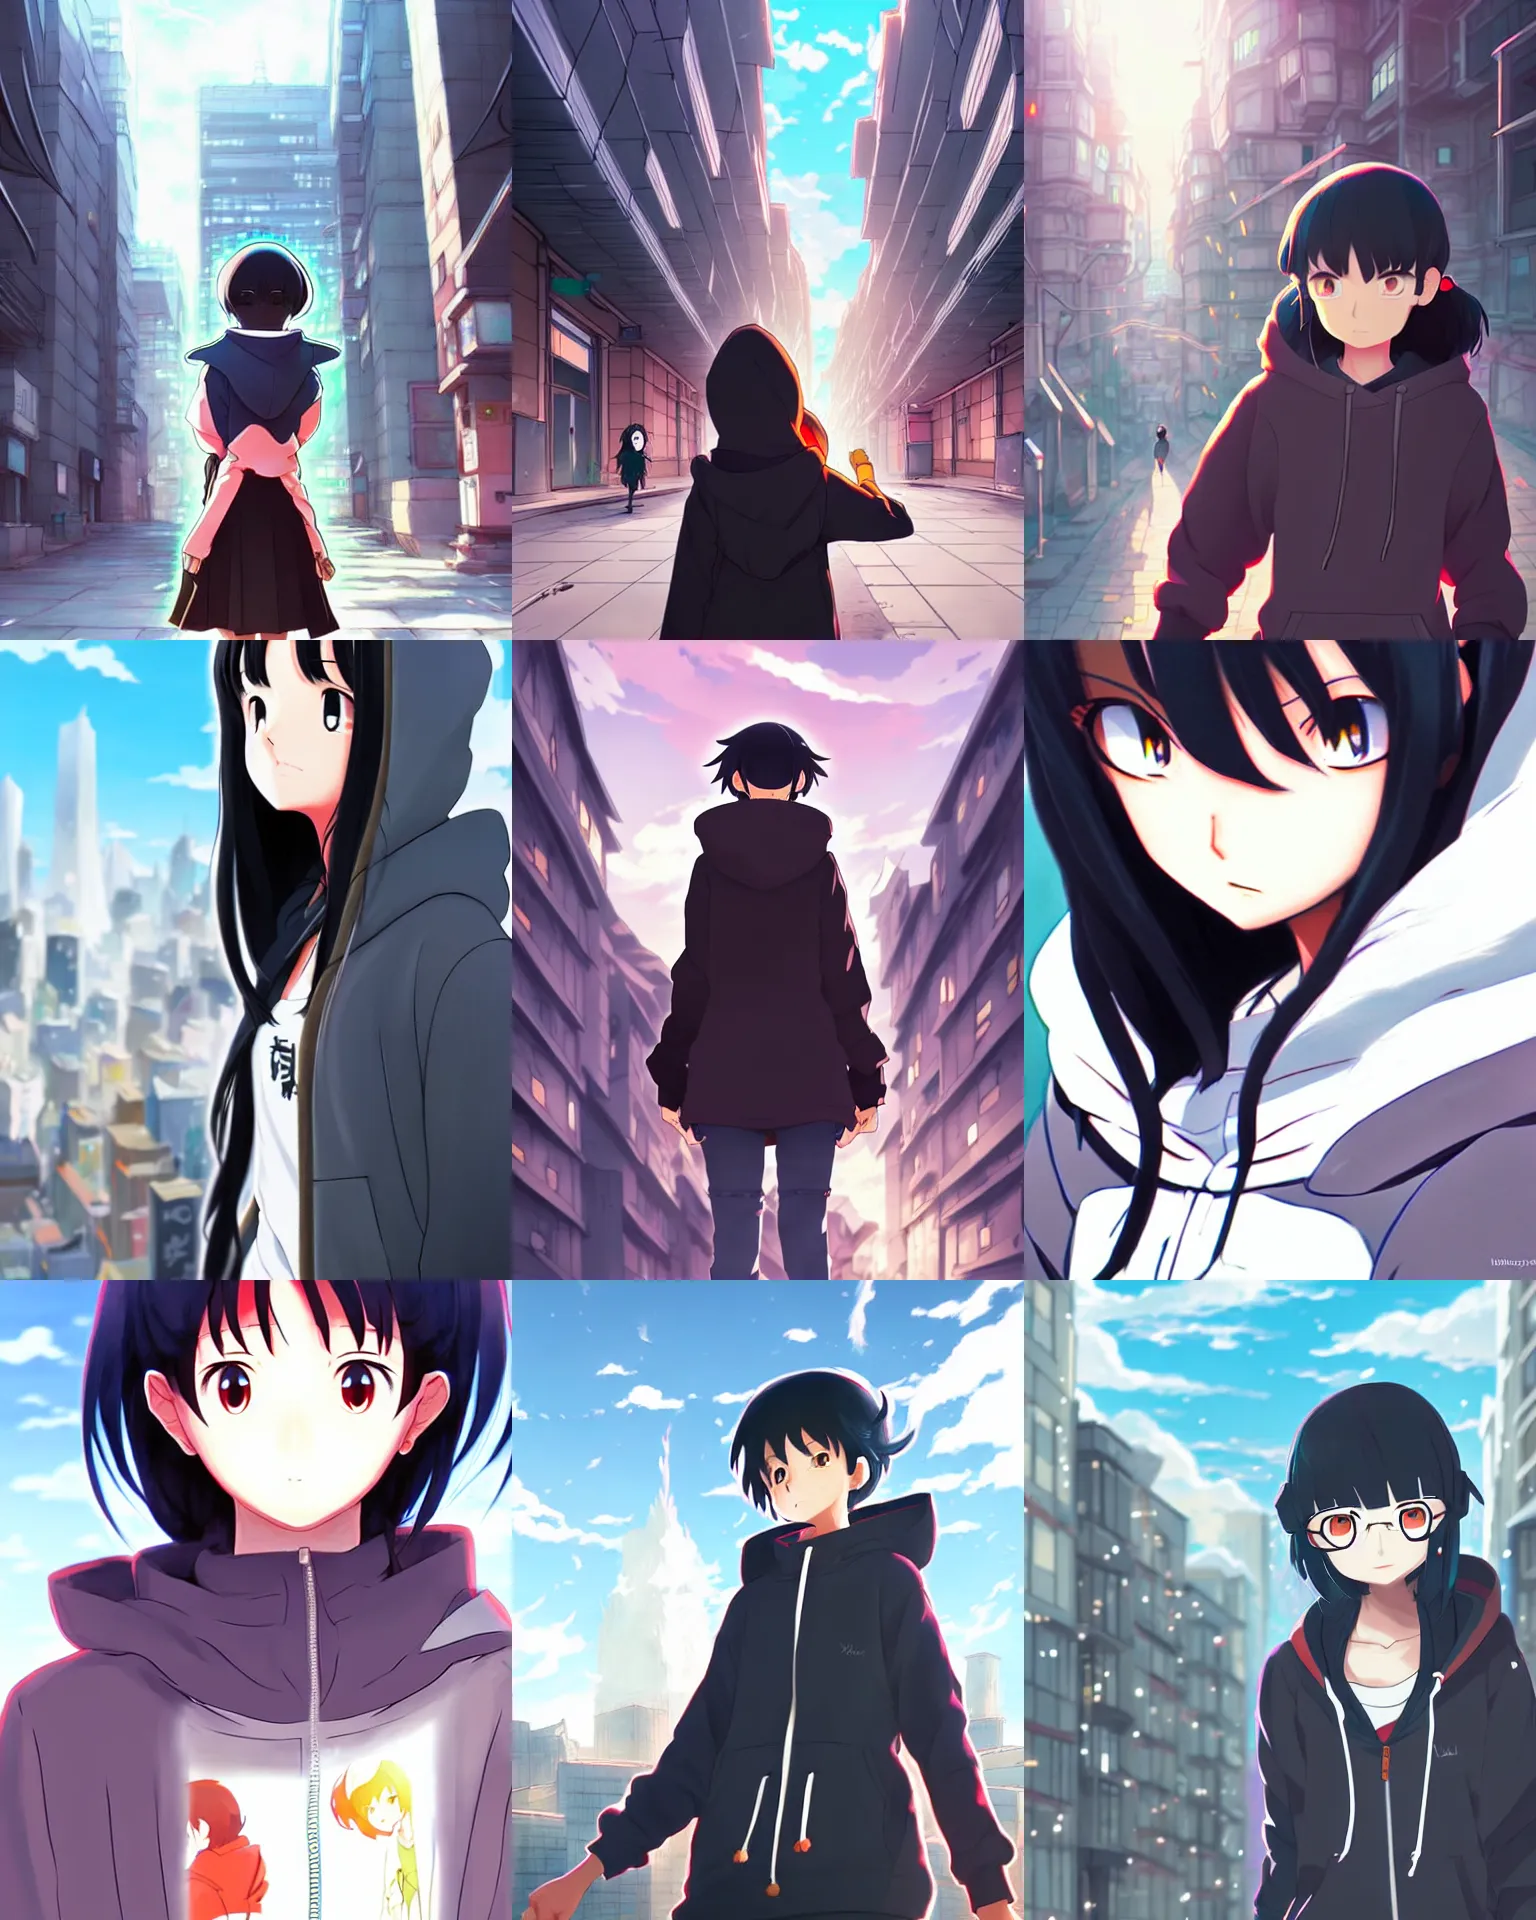 Prompt: black haired girl wearing hoodie, city bright daylight, anime epic artwork, yoh yoshinari